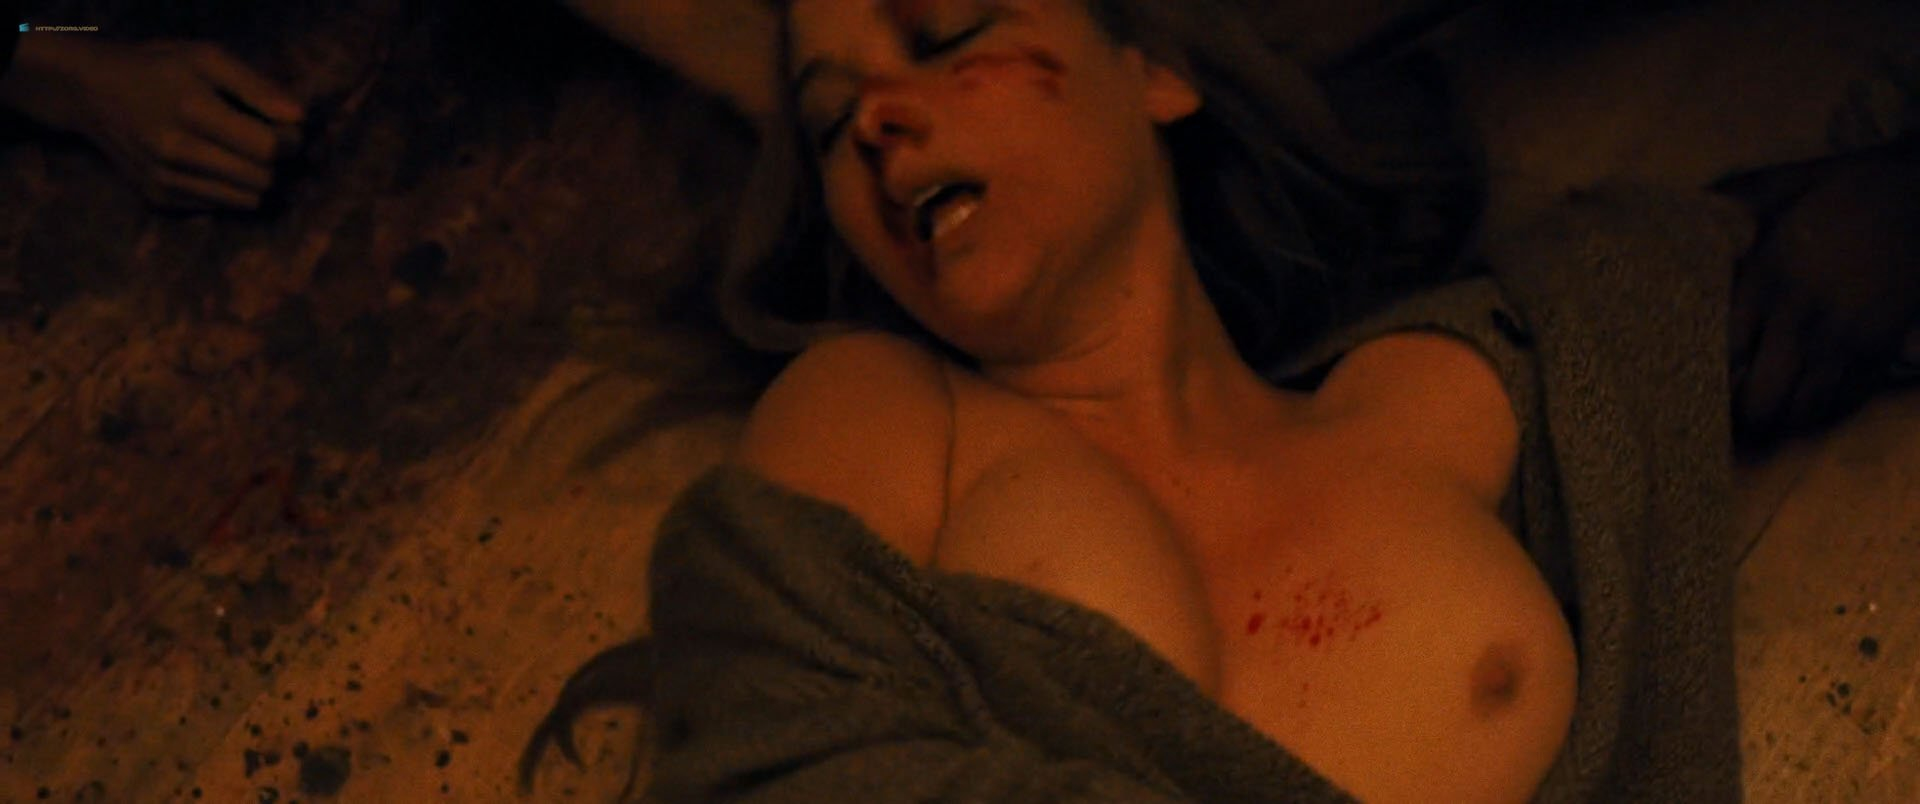 Jennifer lawrence nude movie scene